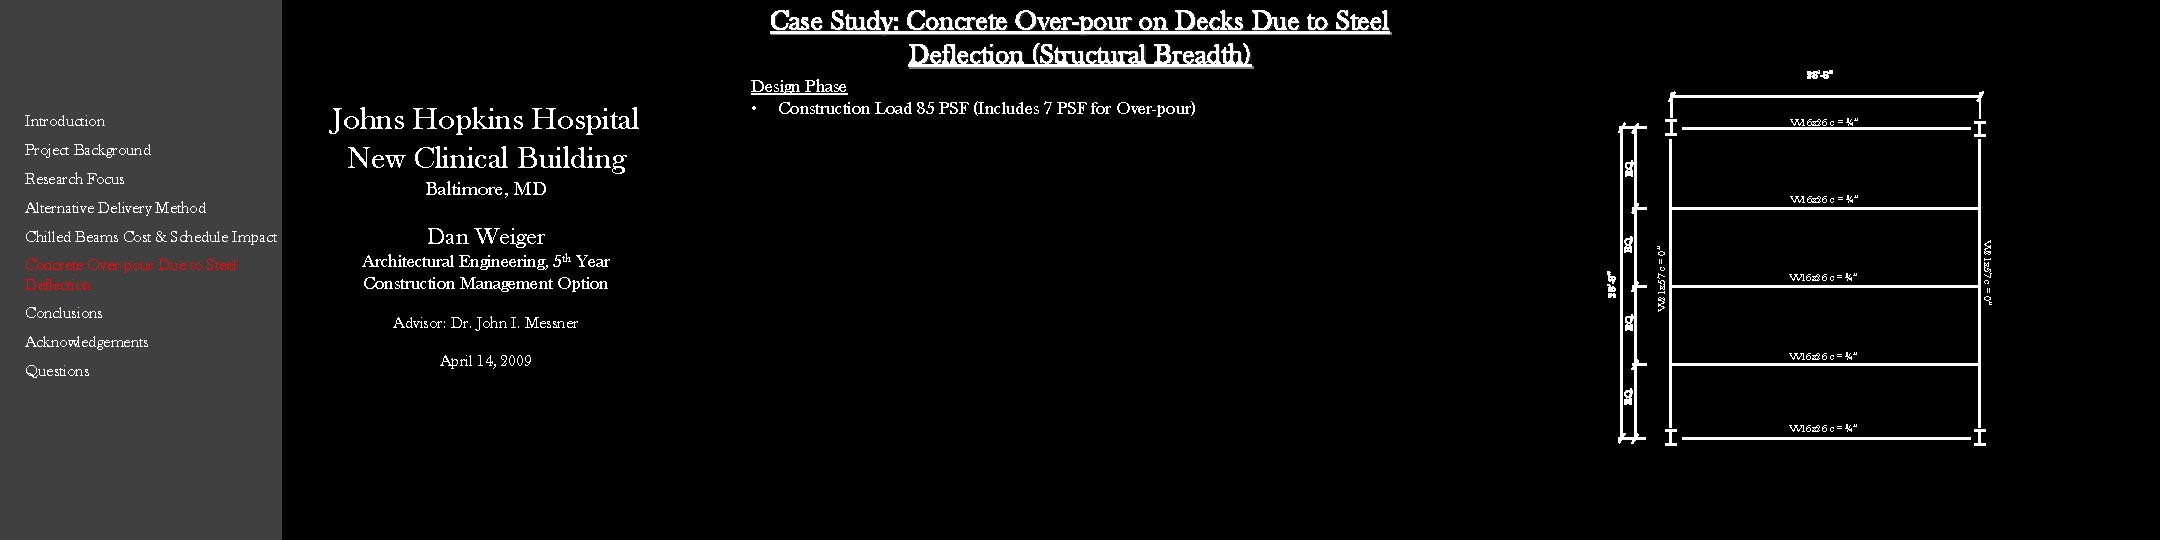 Case Study: Concrete Over-pour on Decks Due to Steel Deflection (Structural Breadth) Concrete Over-pour